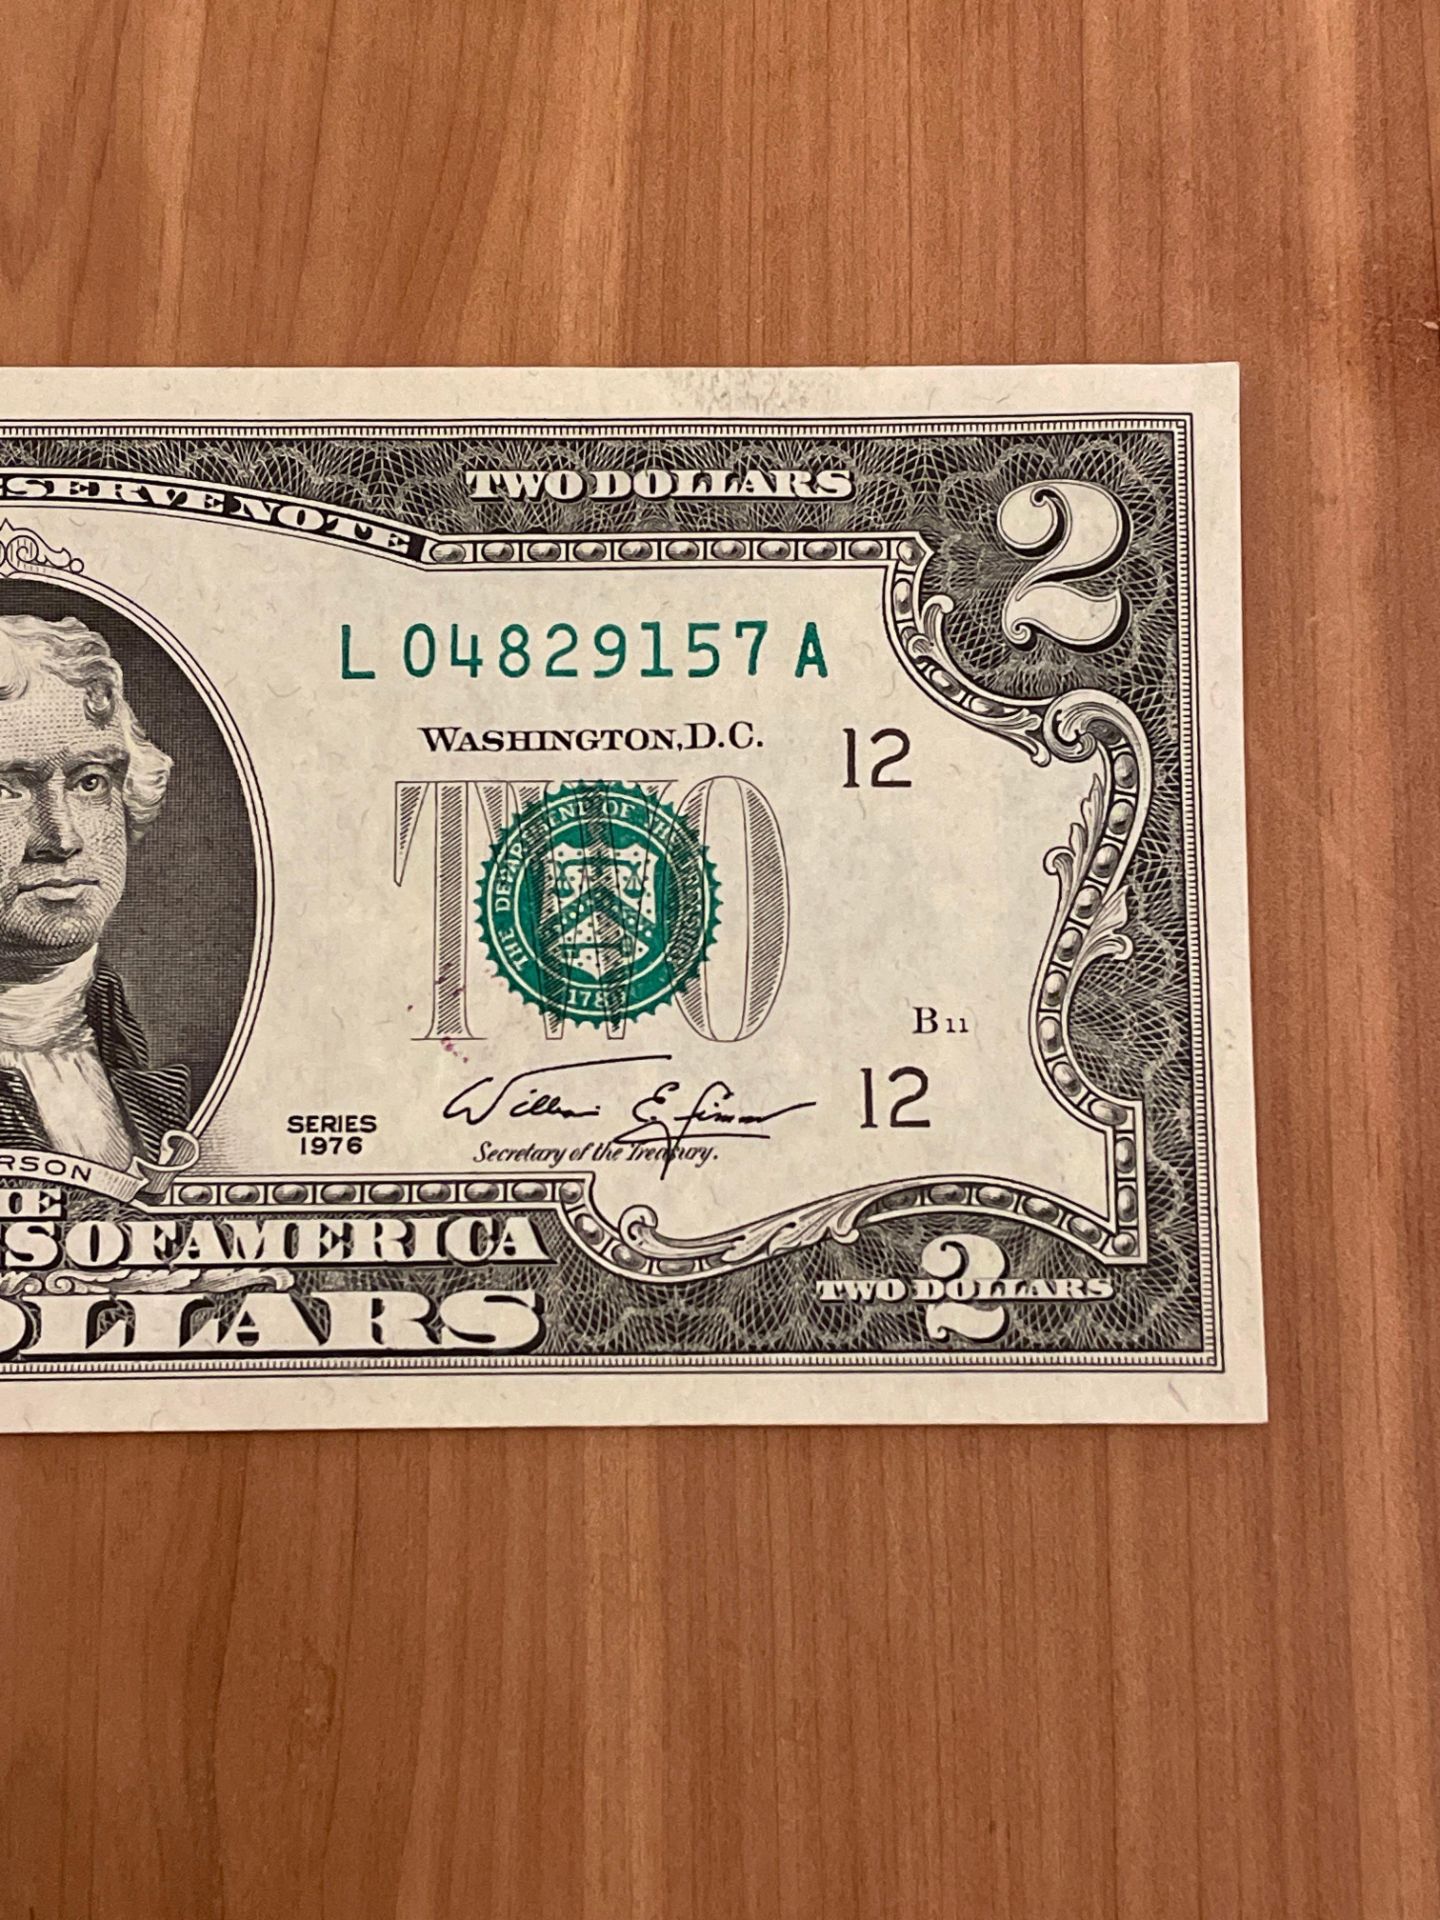 $2 Bills - Image 6 of 7